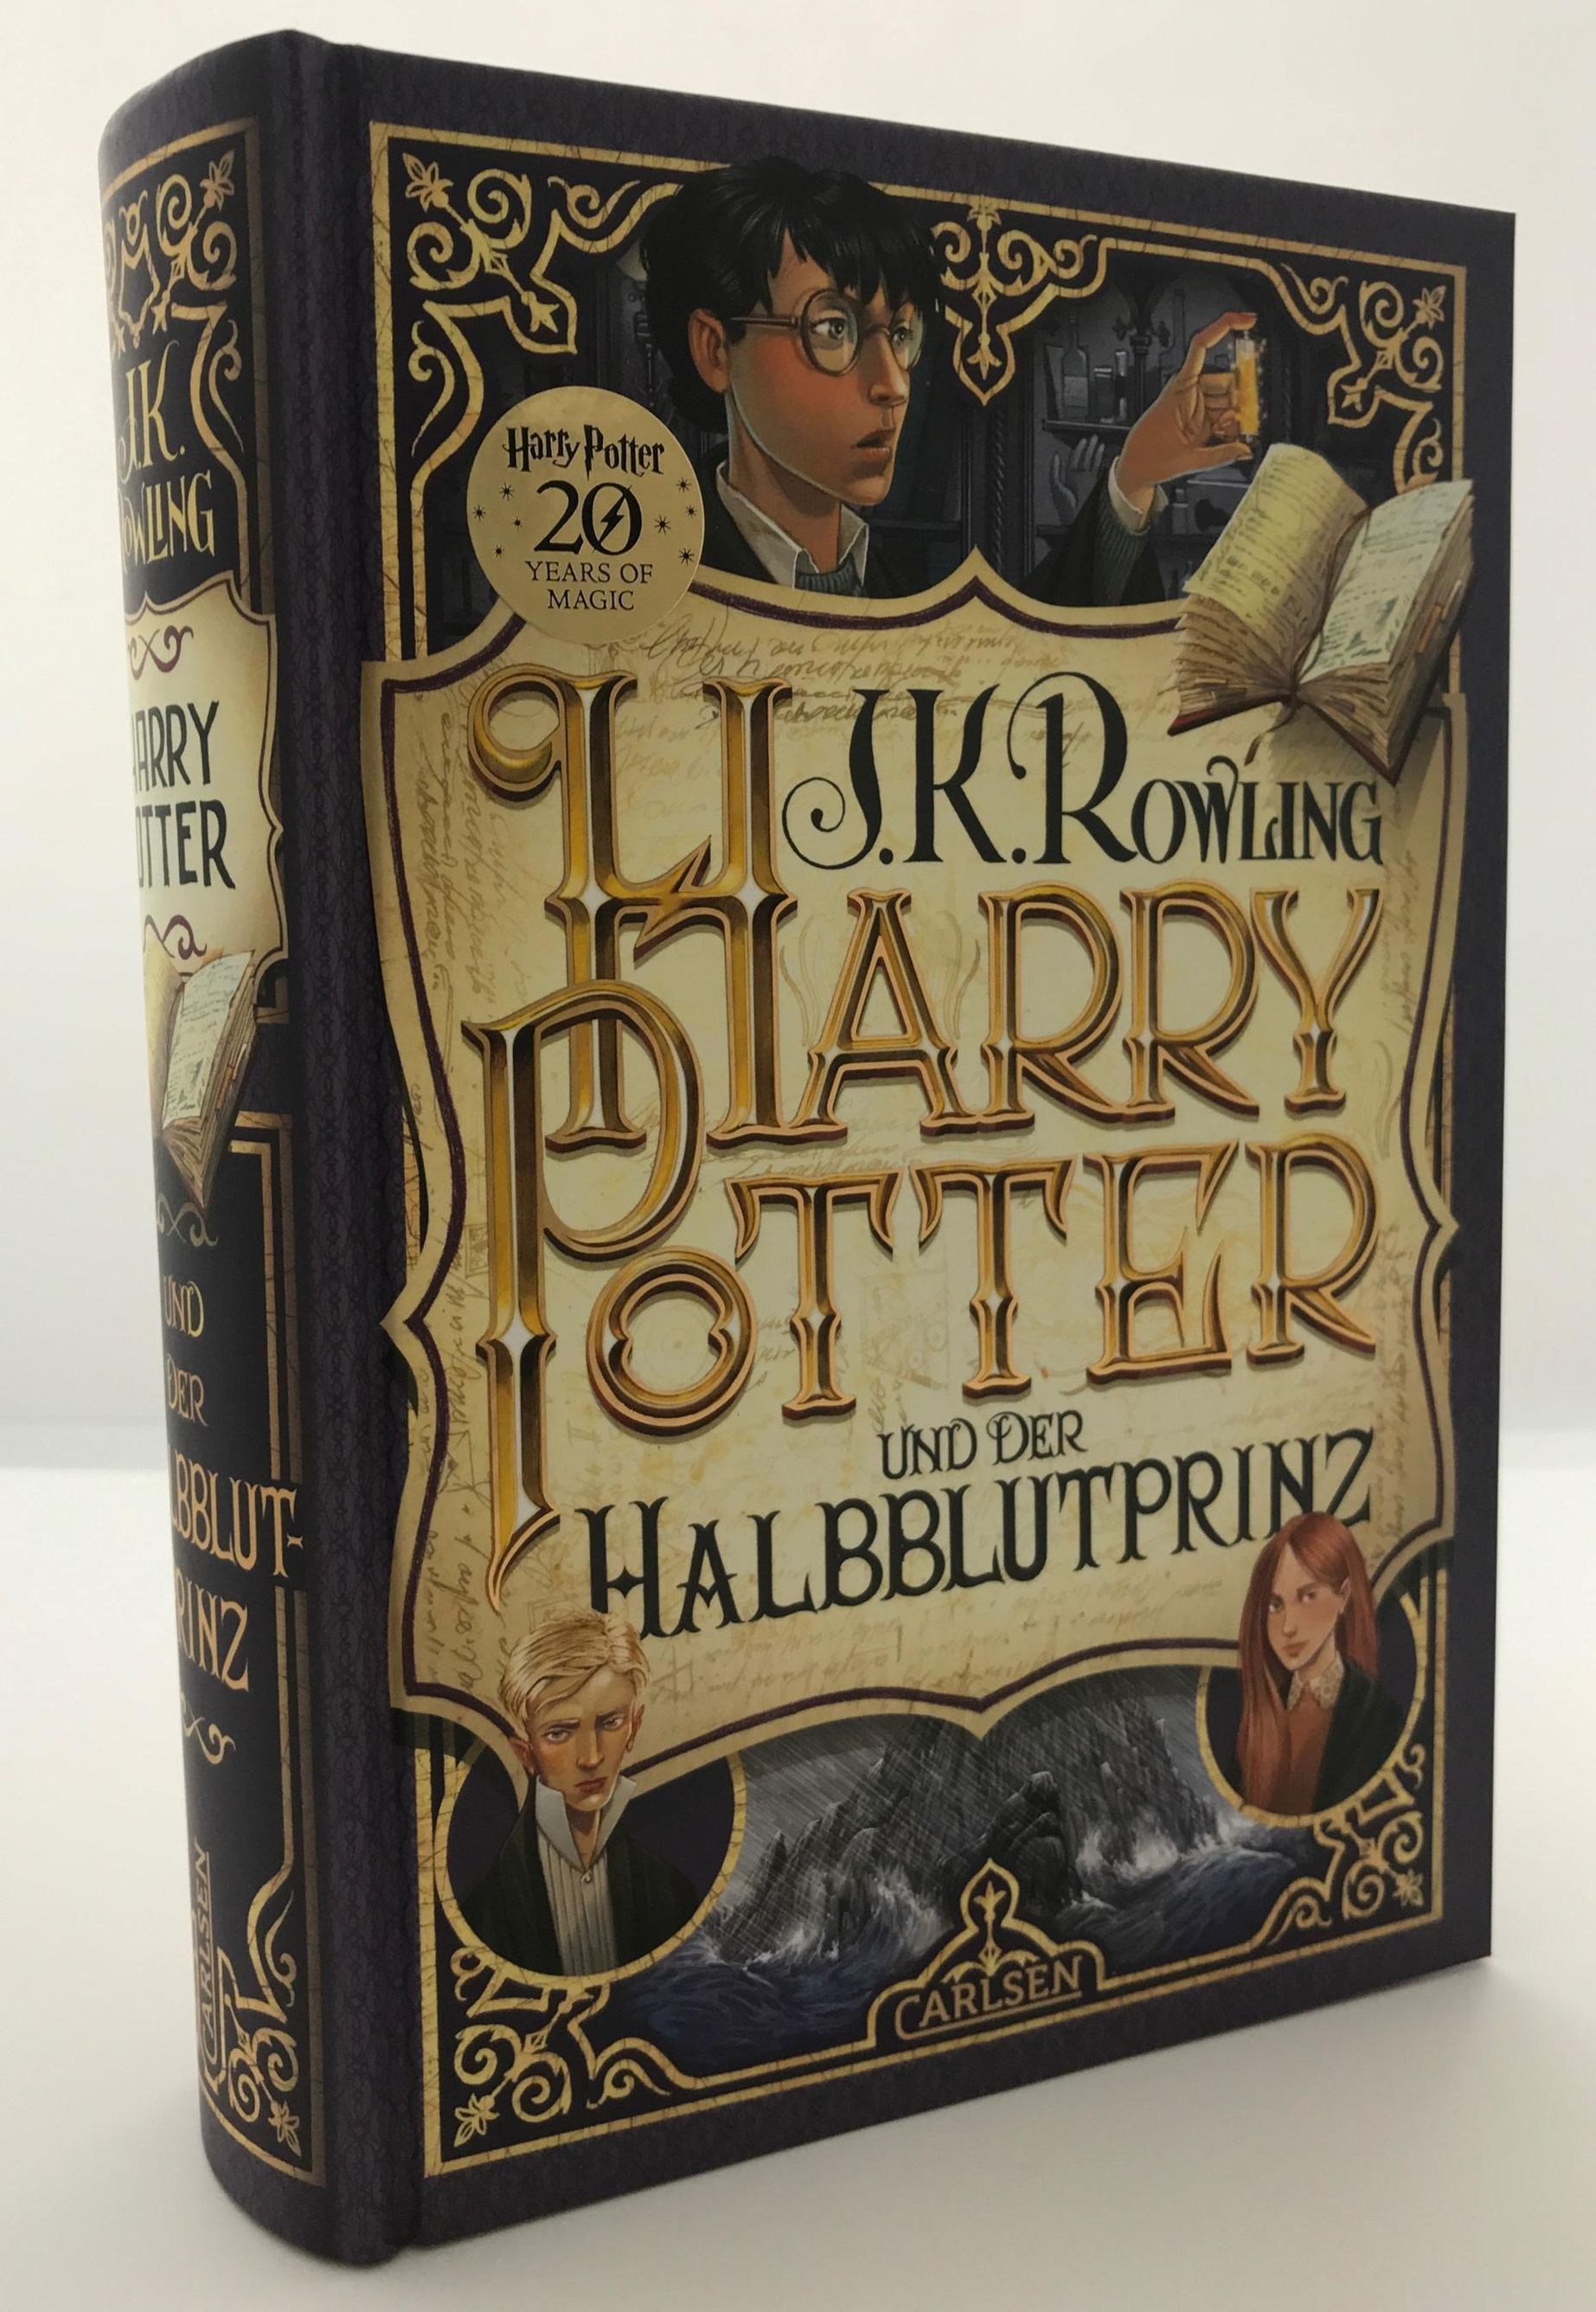 Harry Potter und der Halbblutprinz Harry Potter Jubiläum Bd.6 Buch